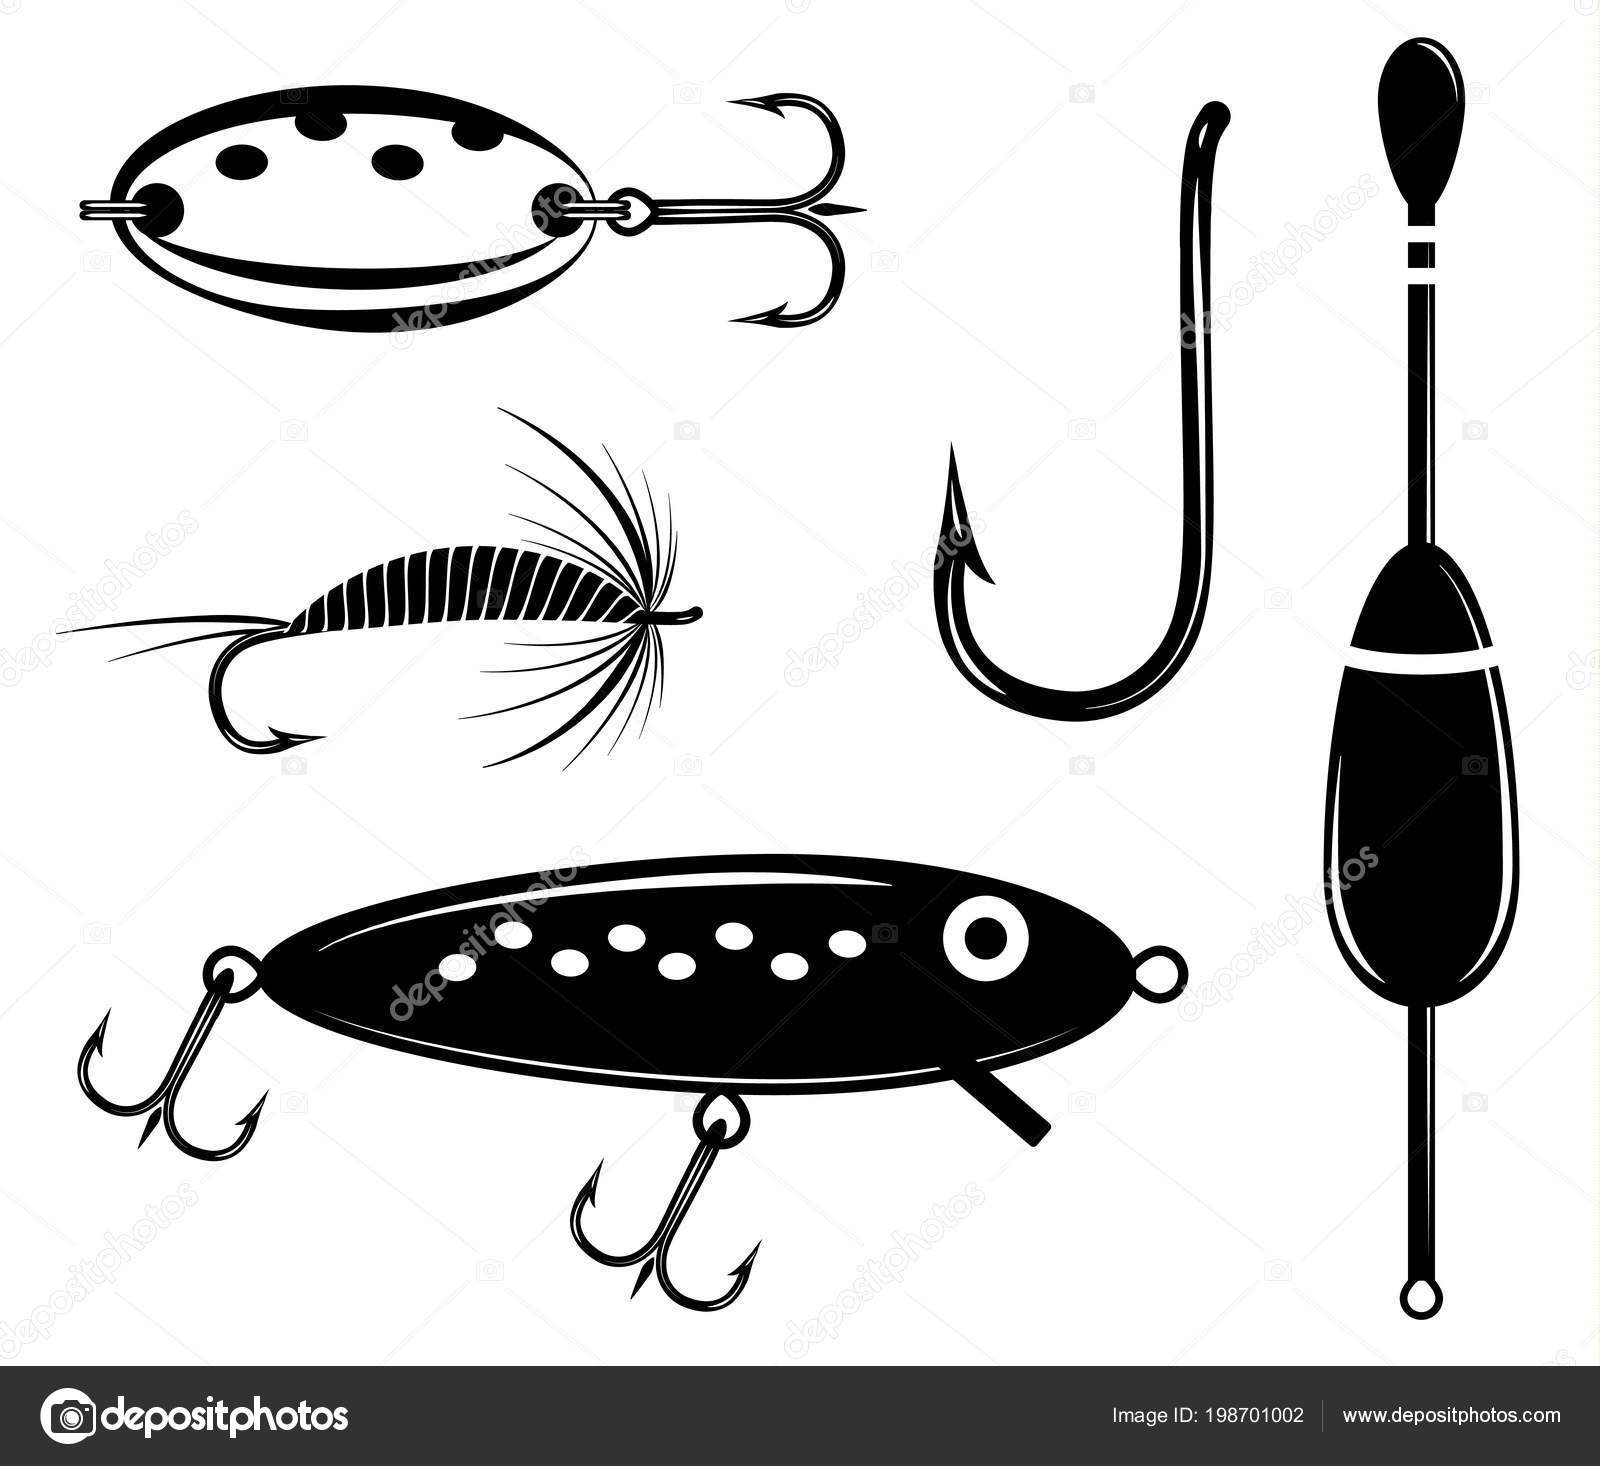 Fishing set vector. Artificial fly, wobbler, lure, float, hook